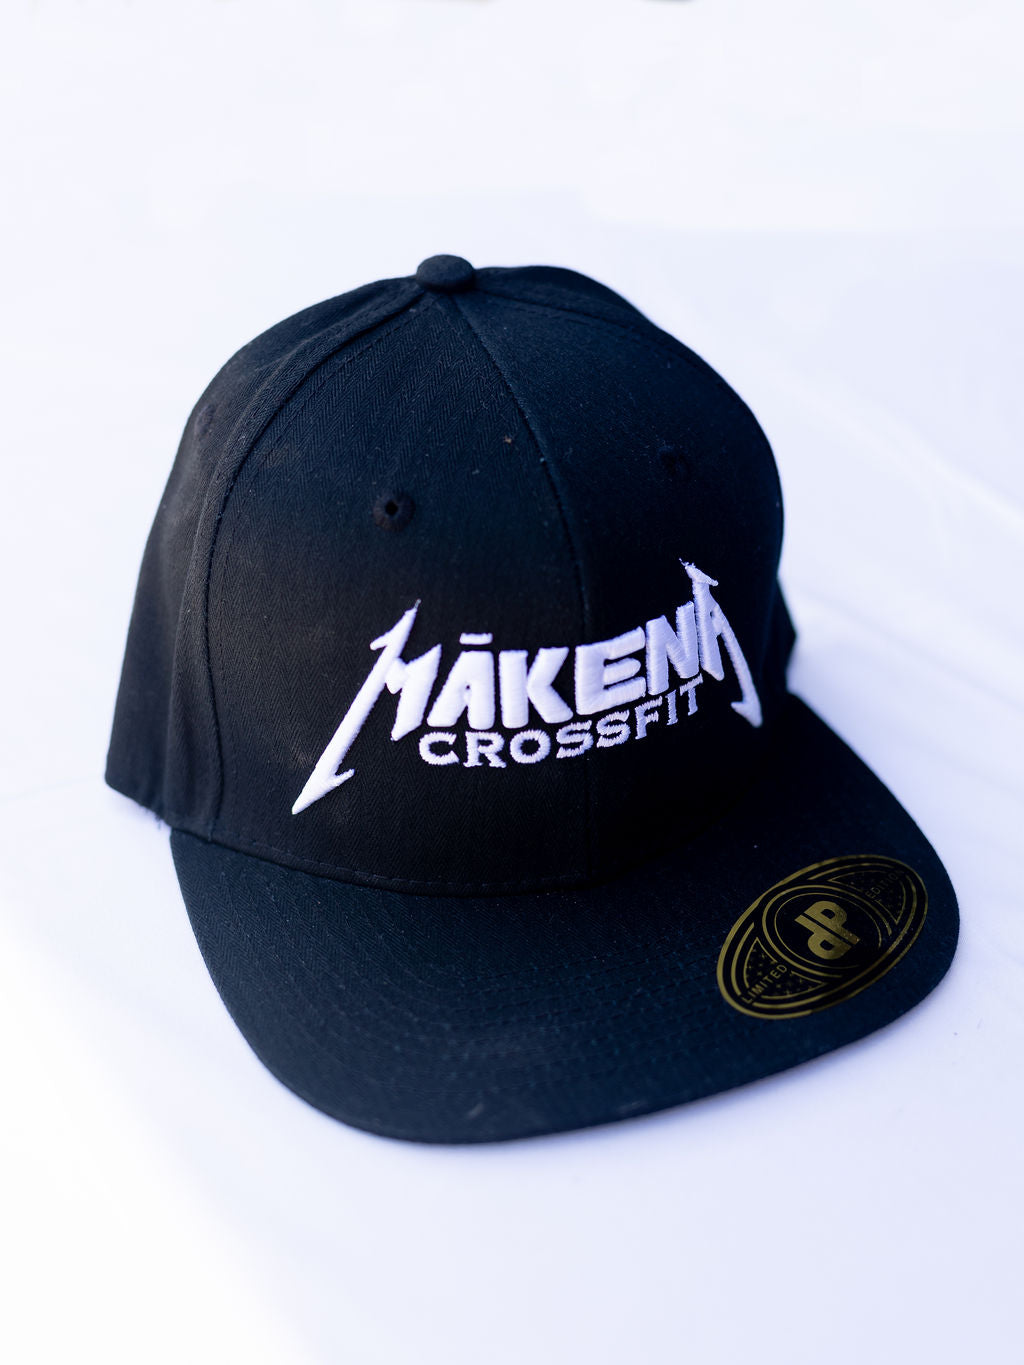 Metallic Makena CrossFit Hat